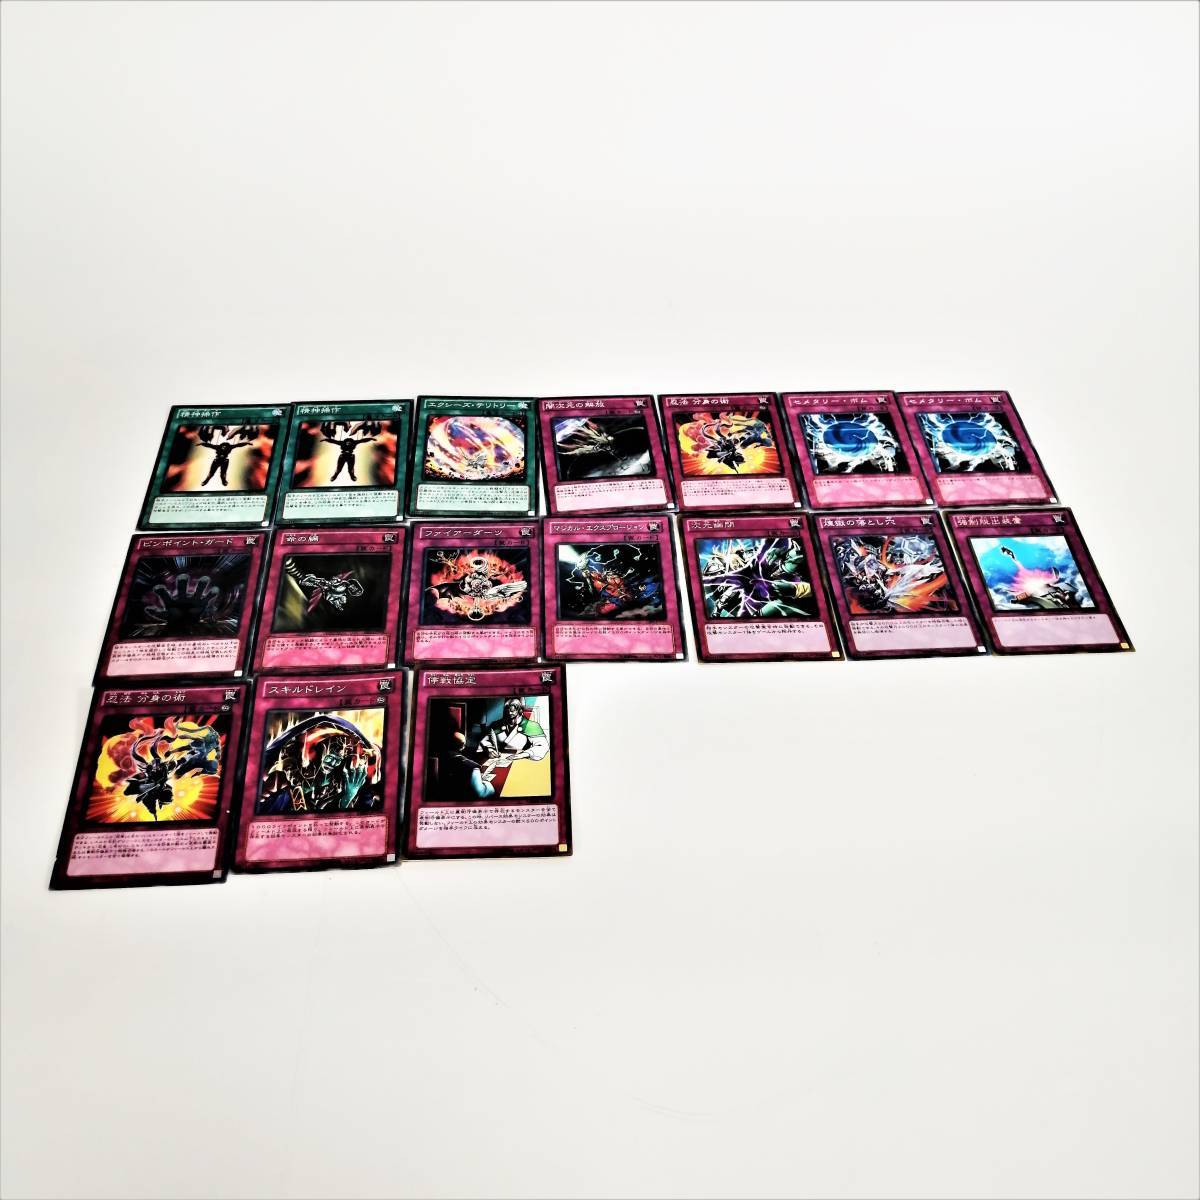 KONAMI 遊戯王カード まとめ売り 72枚 重複あり トレーディングカード 英語版あり【USED品】 22 00328_画像3